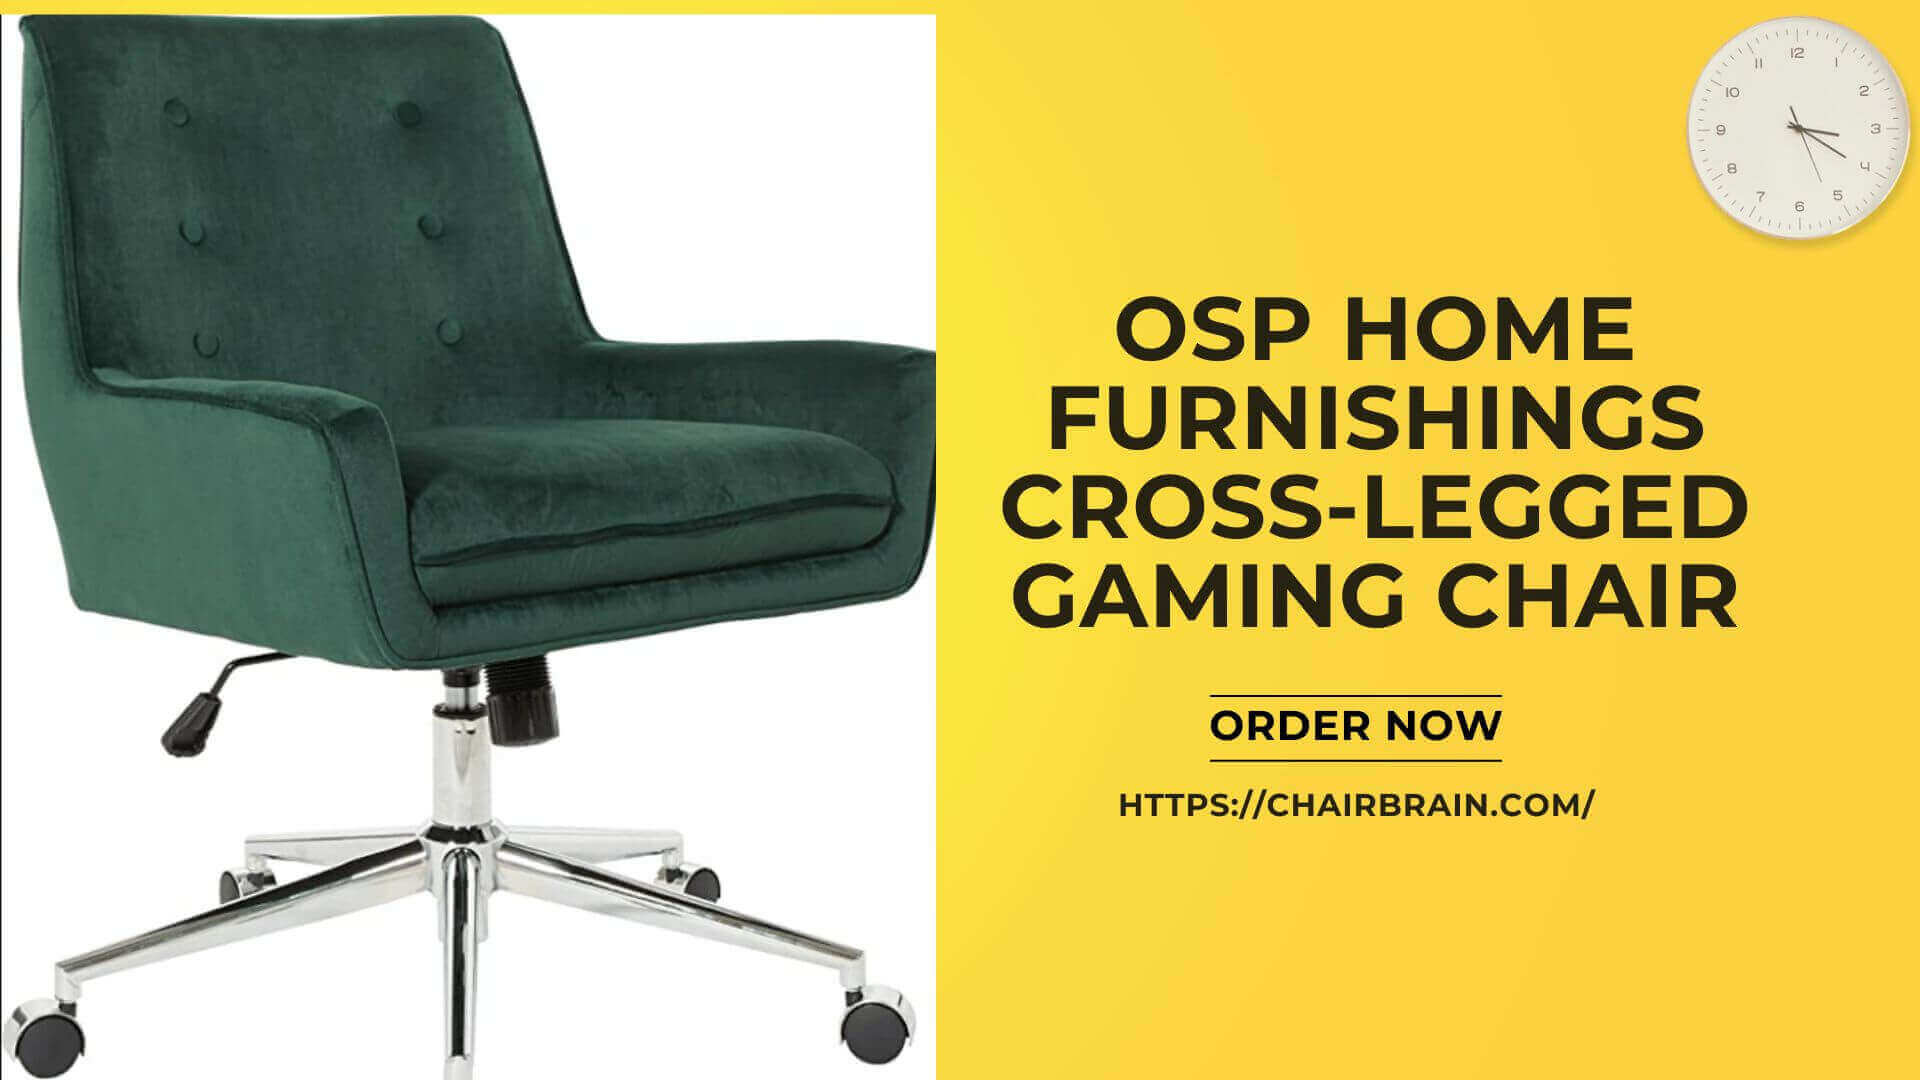 OSP Home Furnishings Cross-Legged Gaming Chair